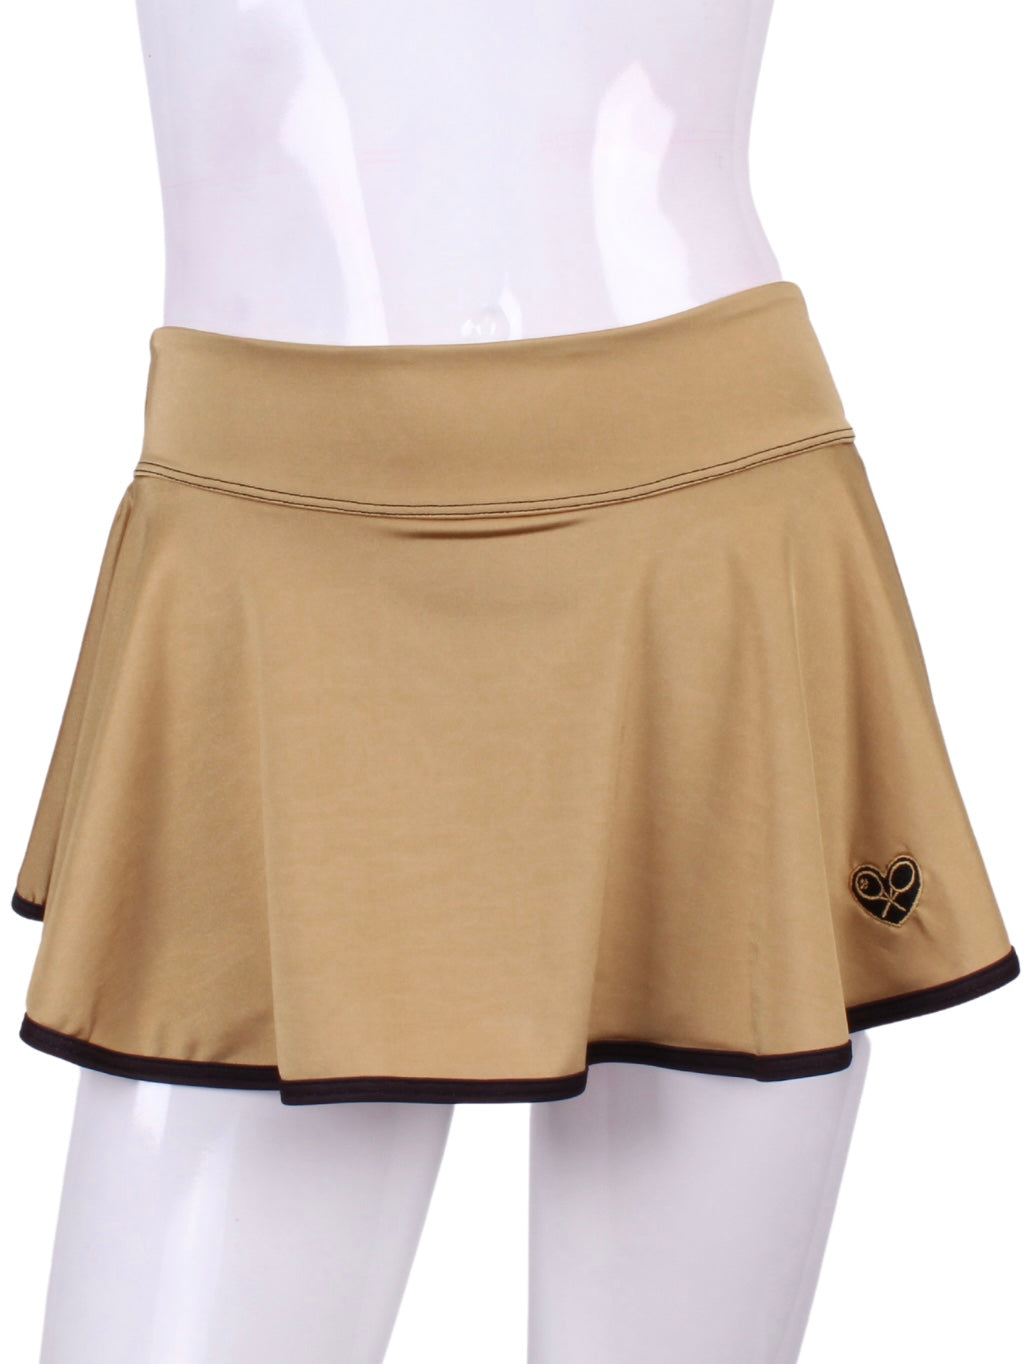 Soft Brushed Gold LOVE “O” Tennis Skirt - I LOVE MY DOUBLES PARTNER!!!